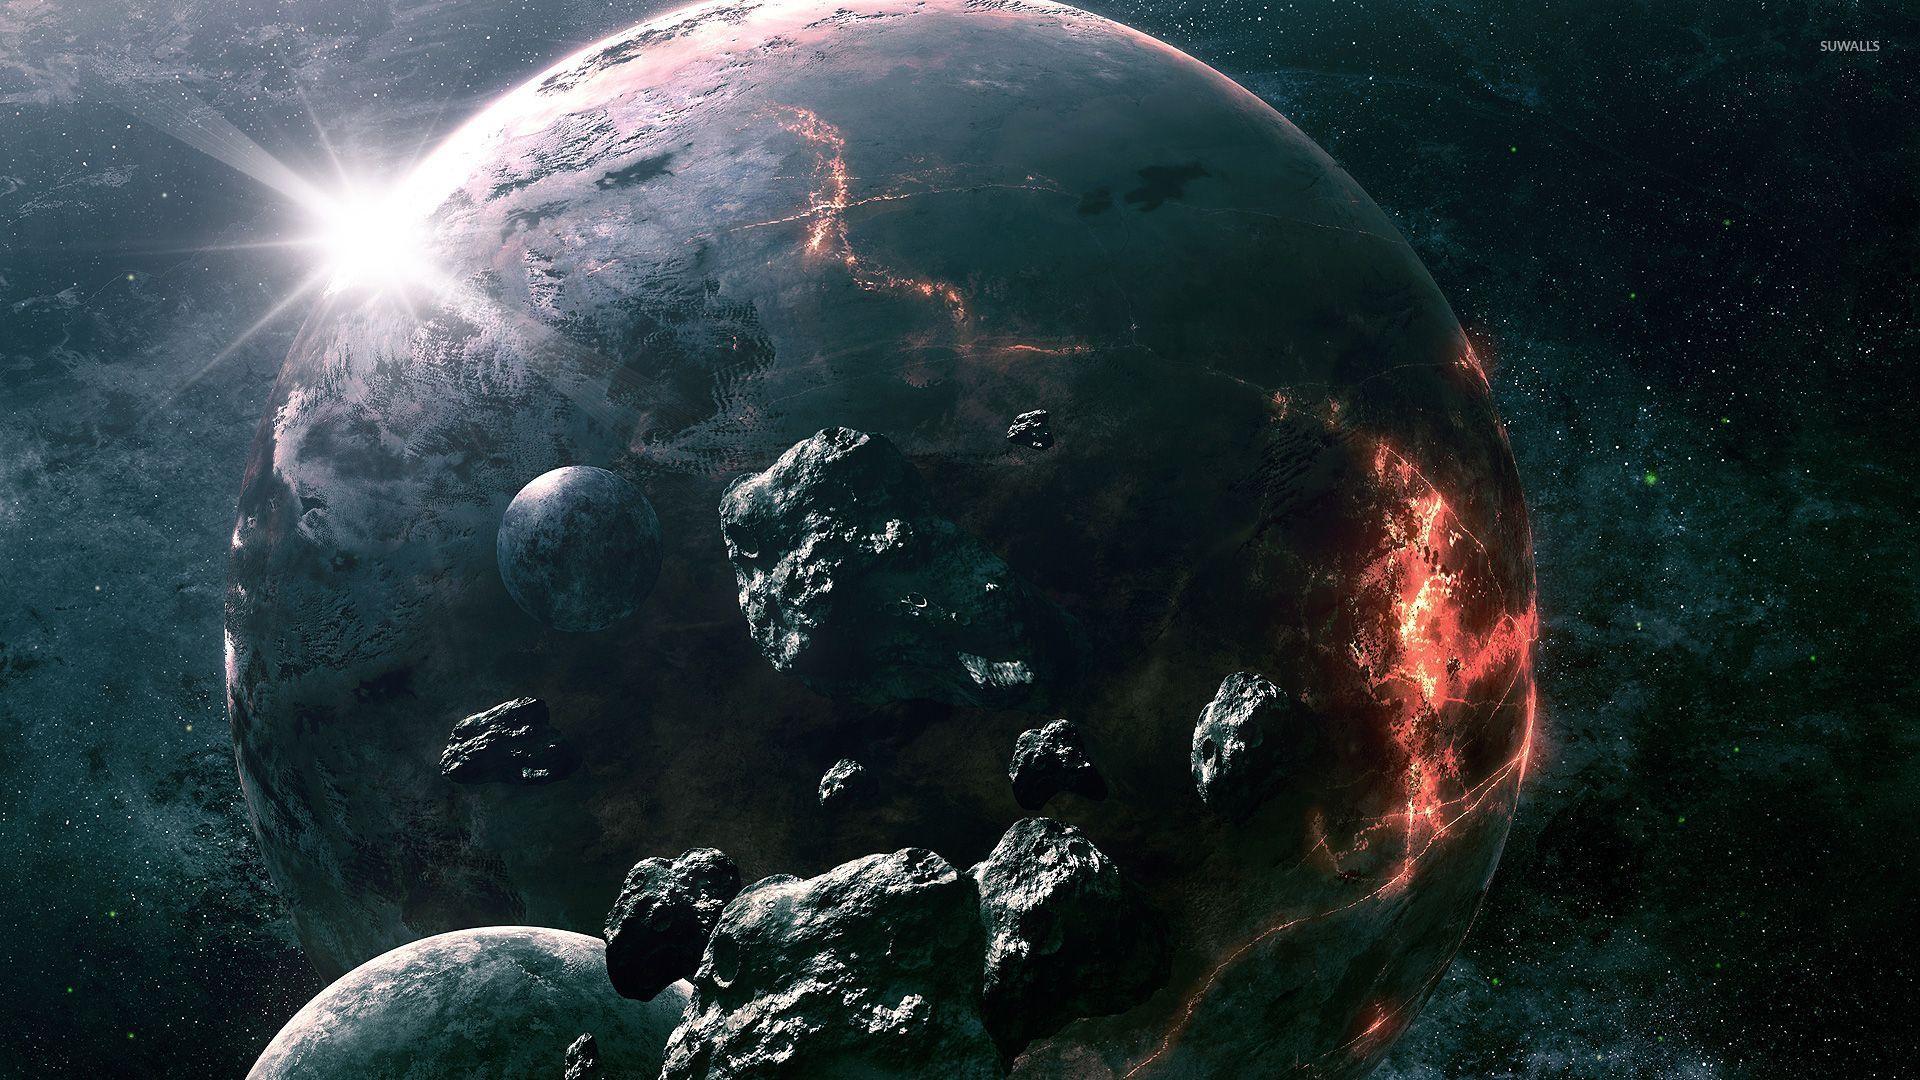 Meteorite circling the imploding planet wallpaper